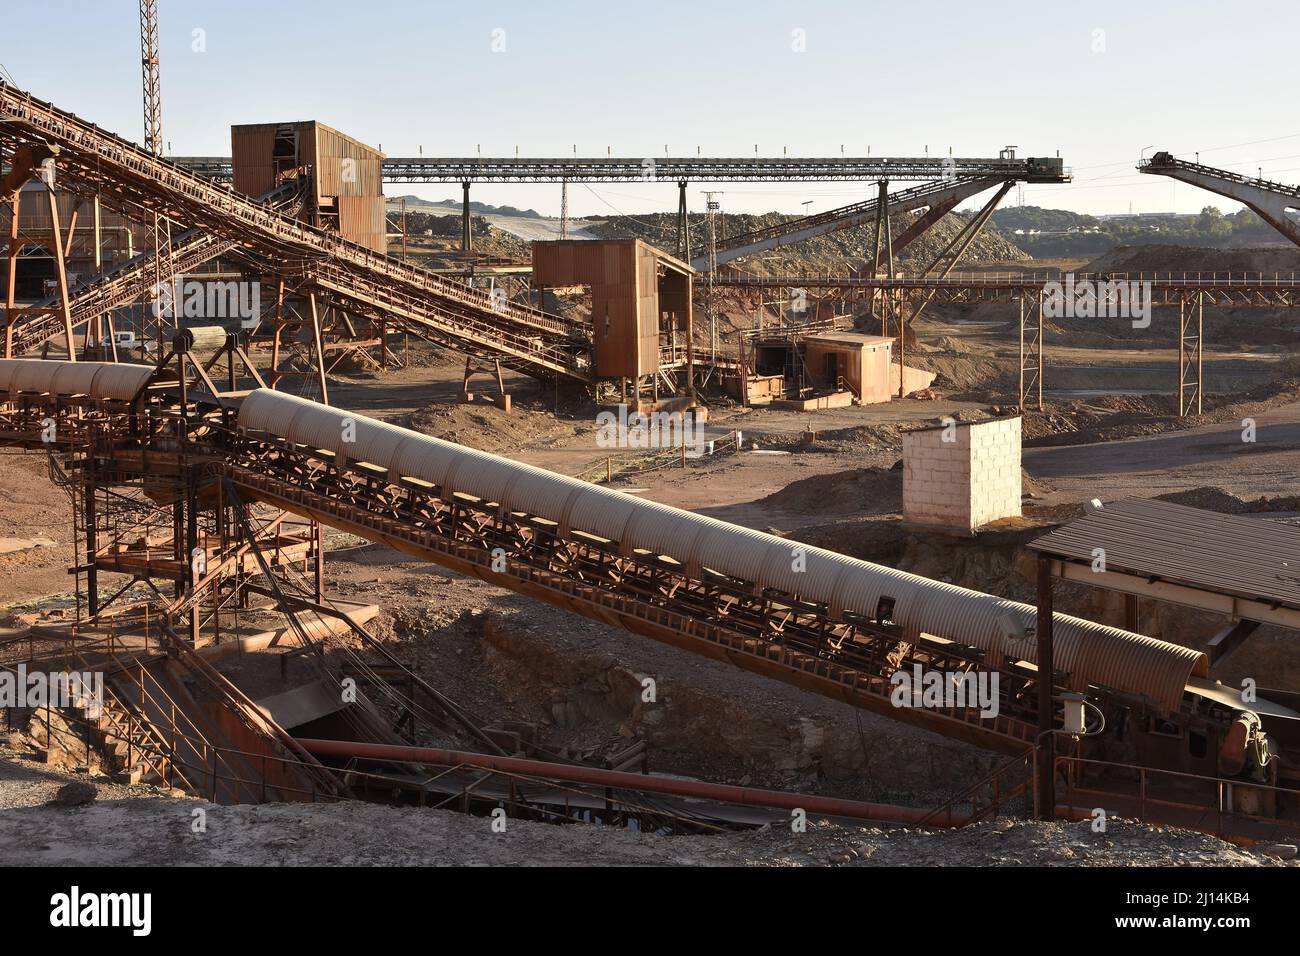 Conveyor belts at Minas de Riotinto open-pit mining site, province of Huelva southern Spain. Stock Photo